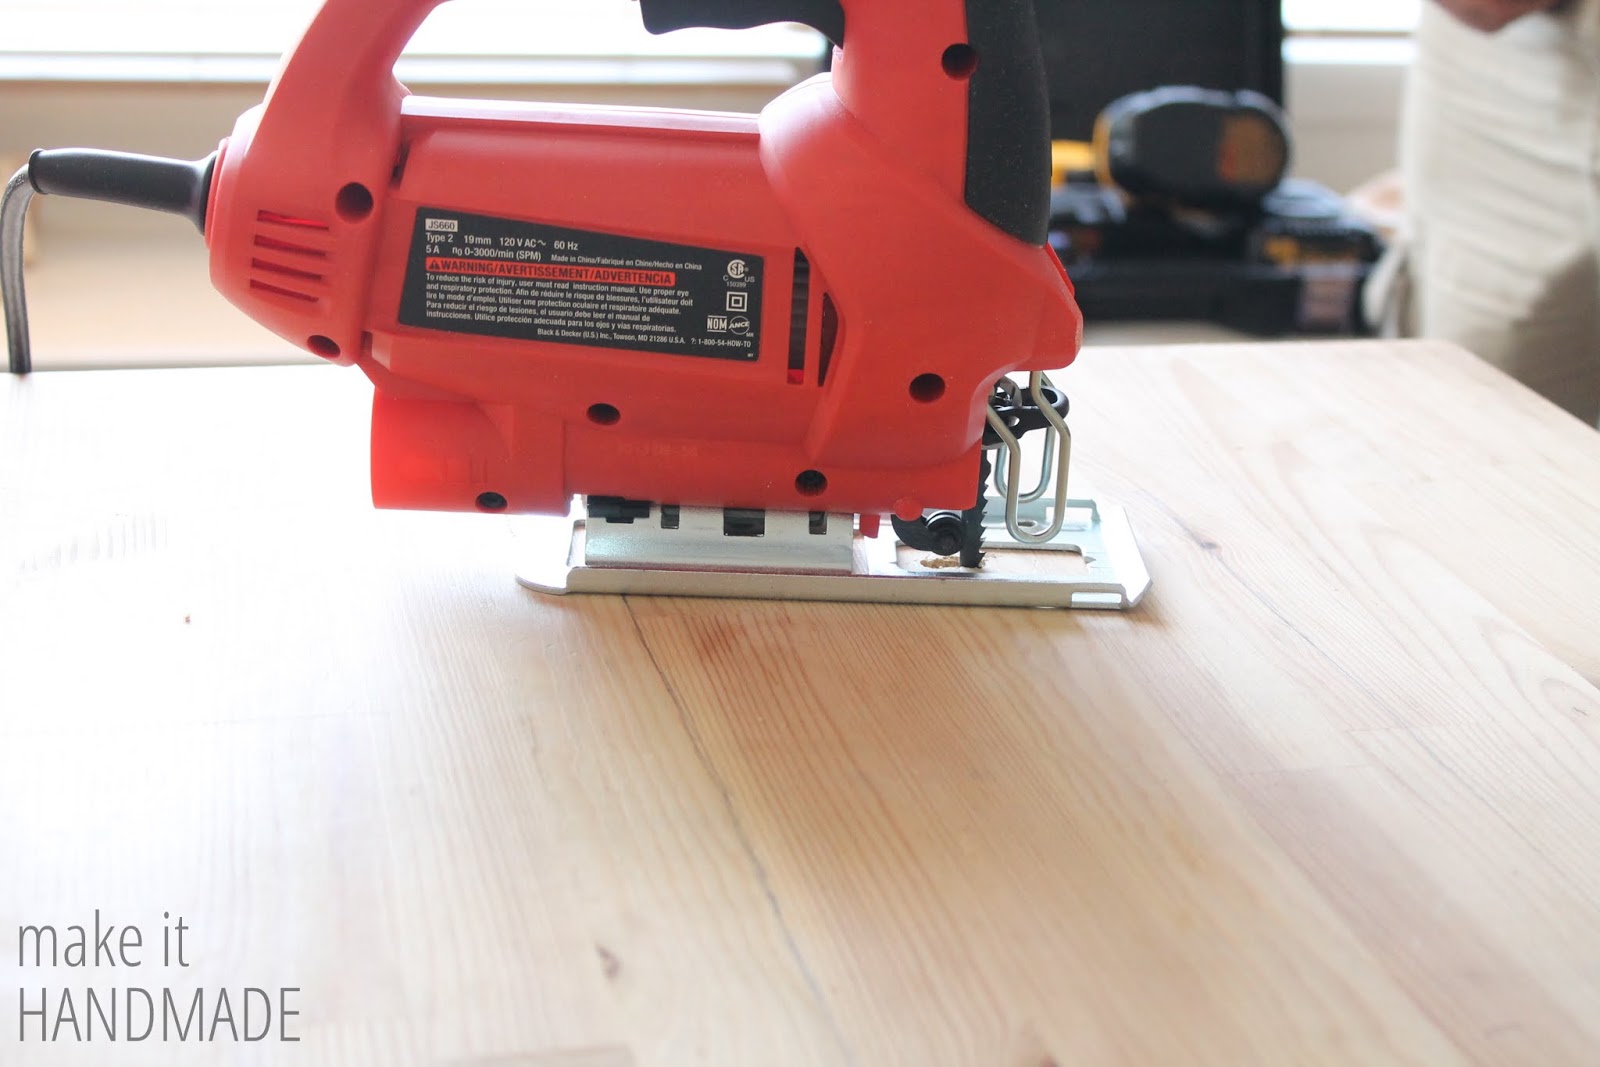 Make It Handmade: Easy DIY IKEA Sewing Table Hack